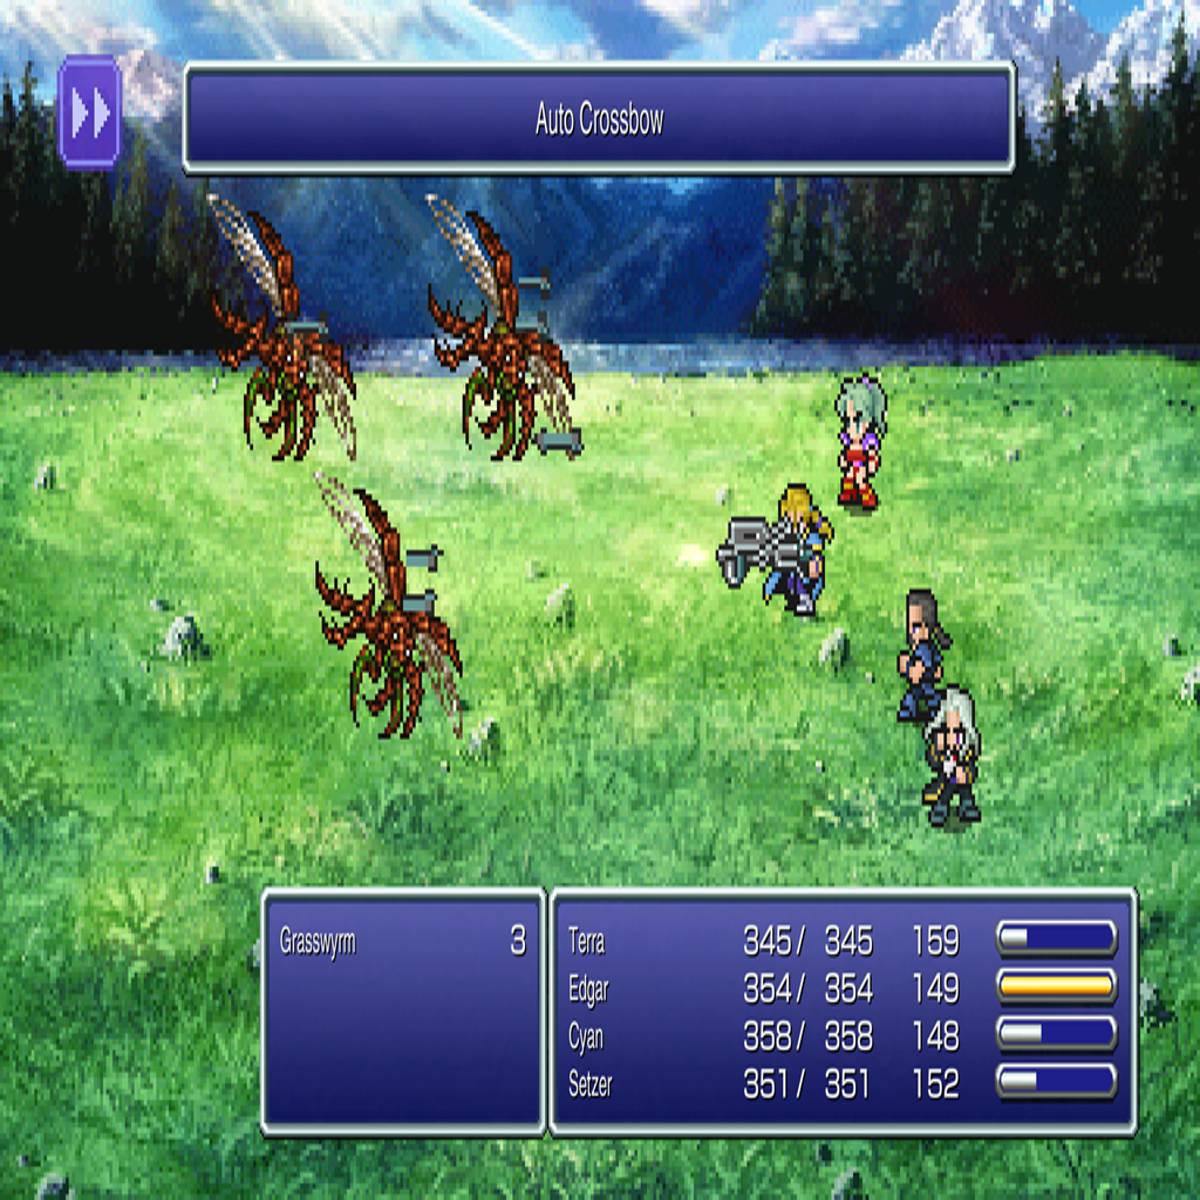 Final Fantasy VI's pixel remaster arrives on Steam on Feb 23rd 